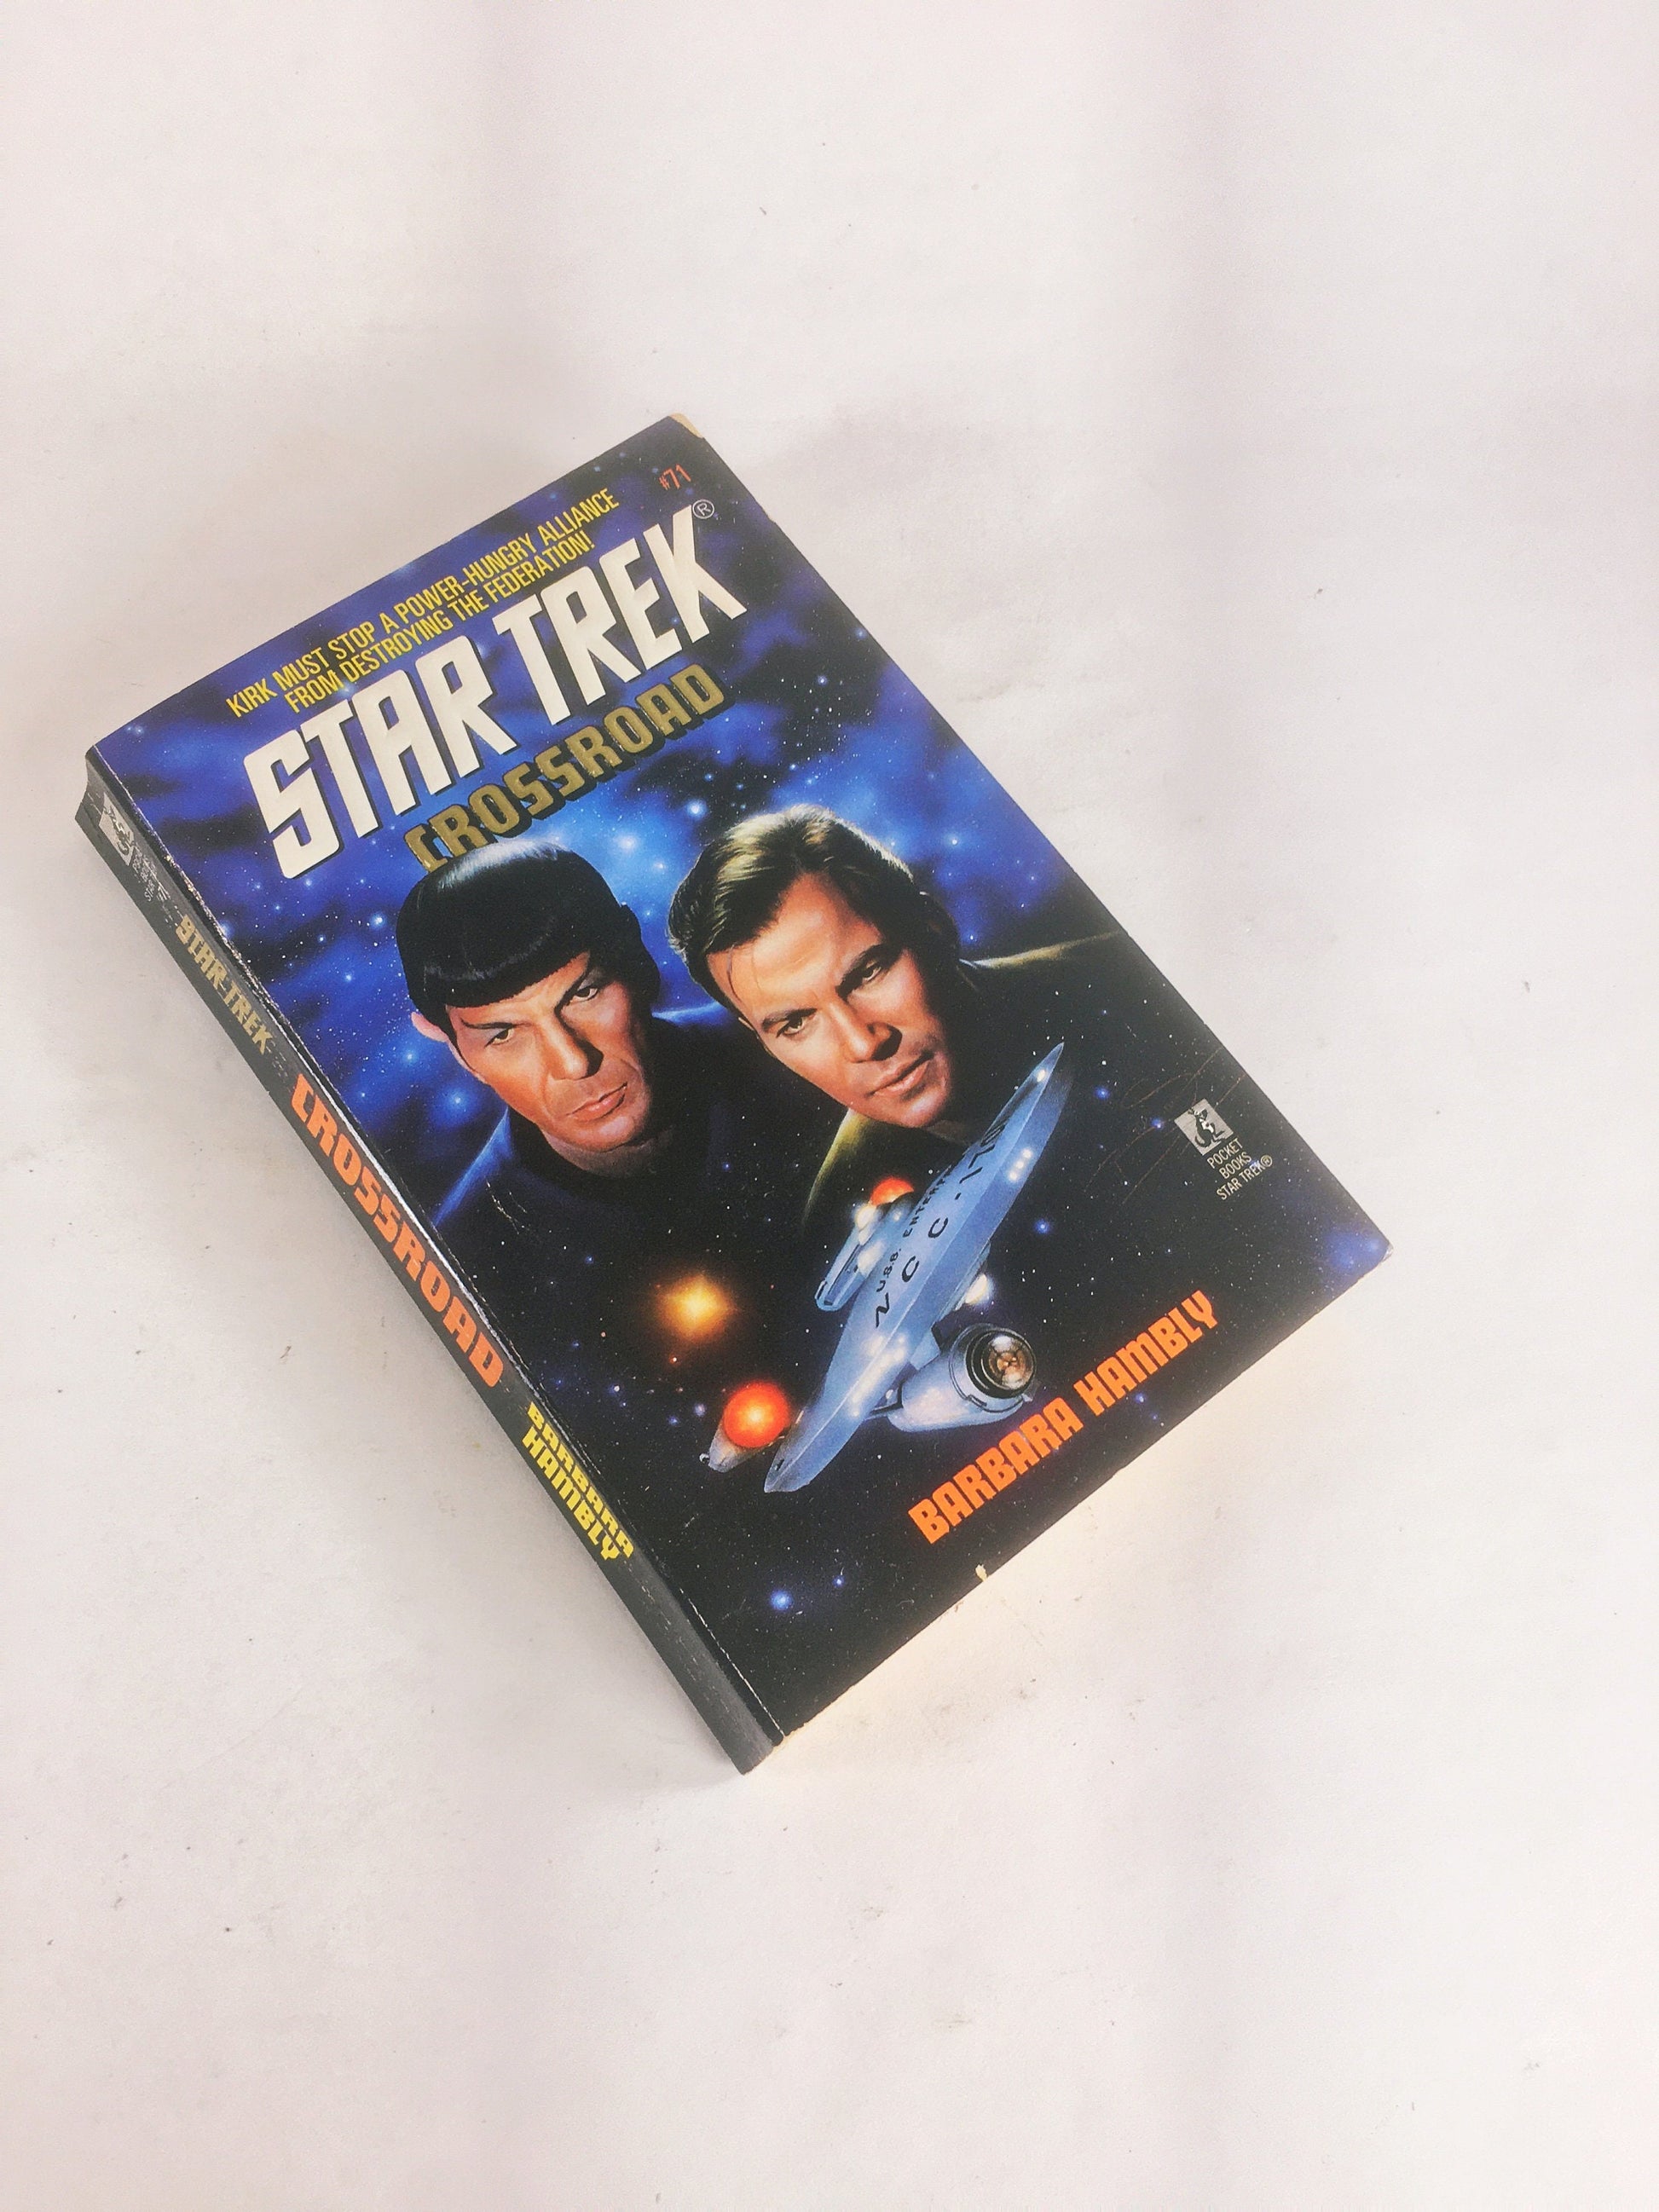 Star Trek Crossroad vintage paperback book by Barbara Hambly circa 1994. Pocket Books, Spock, Captain Kirk James Blish.